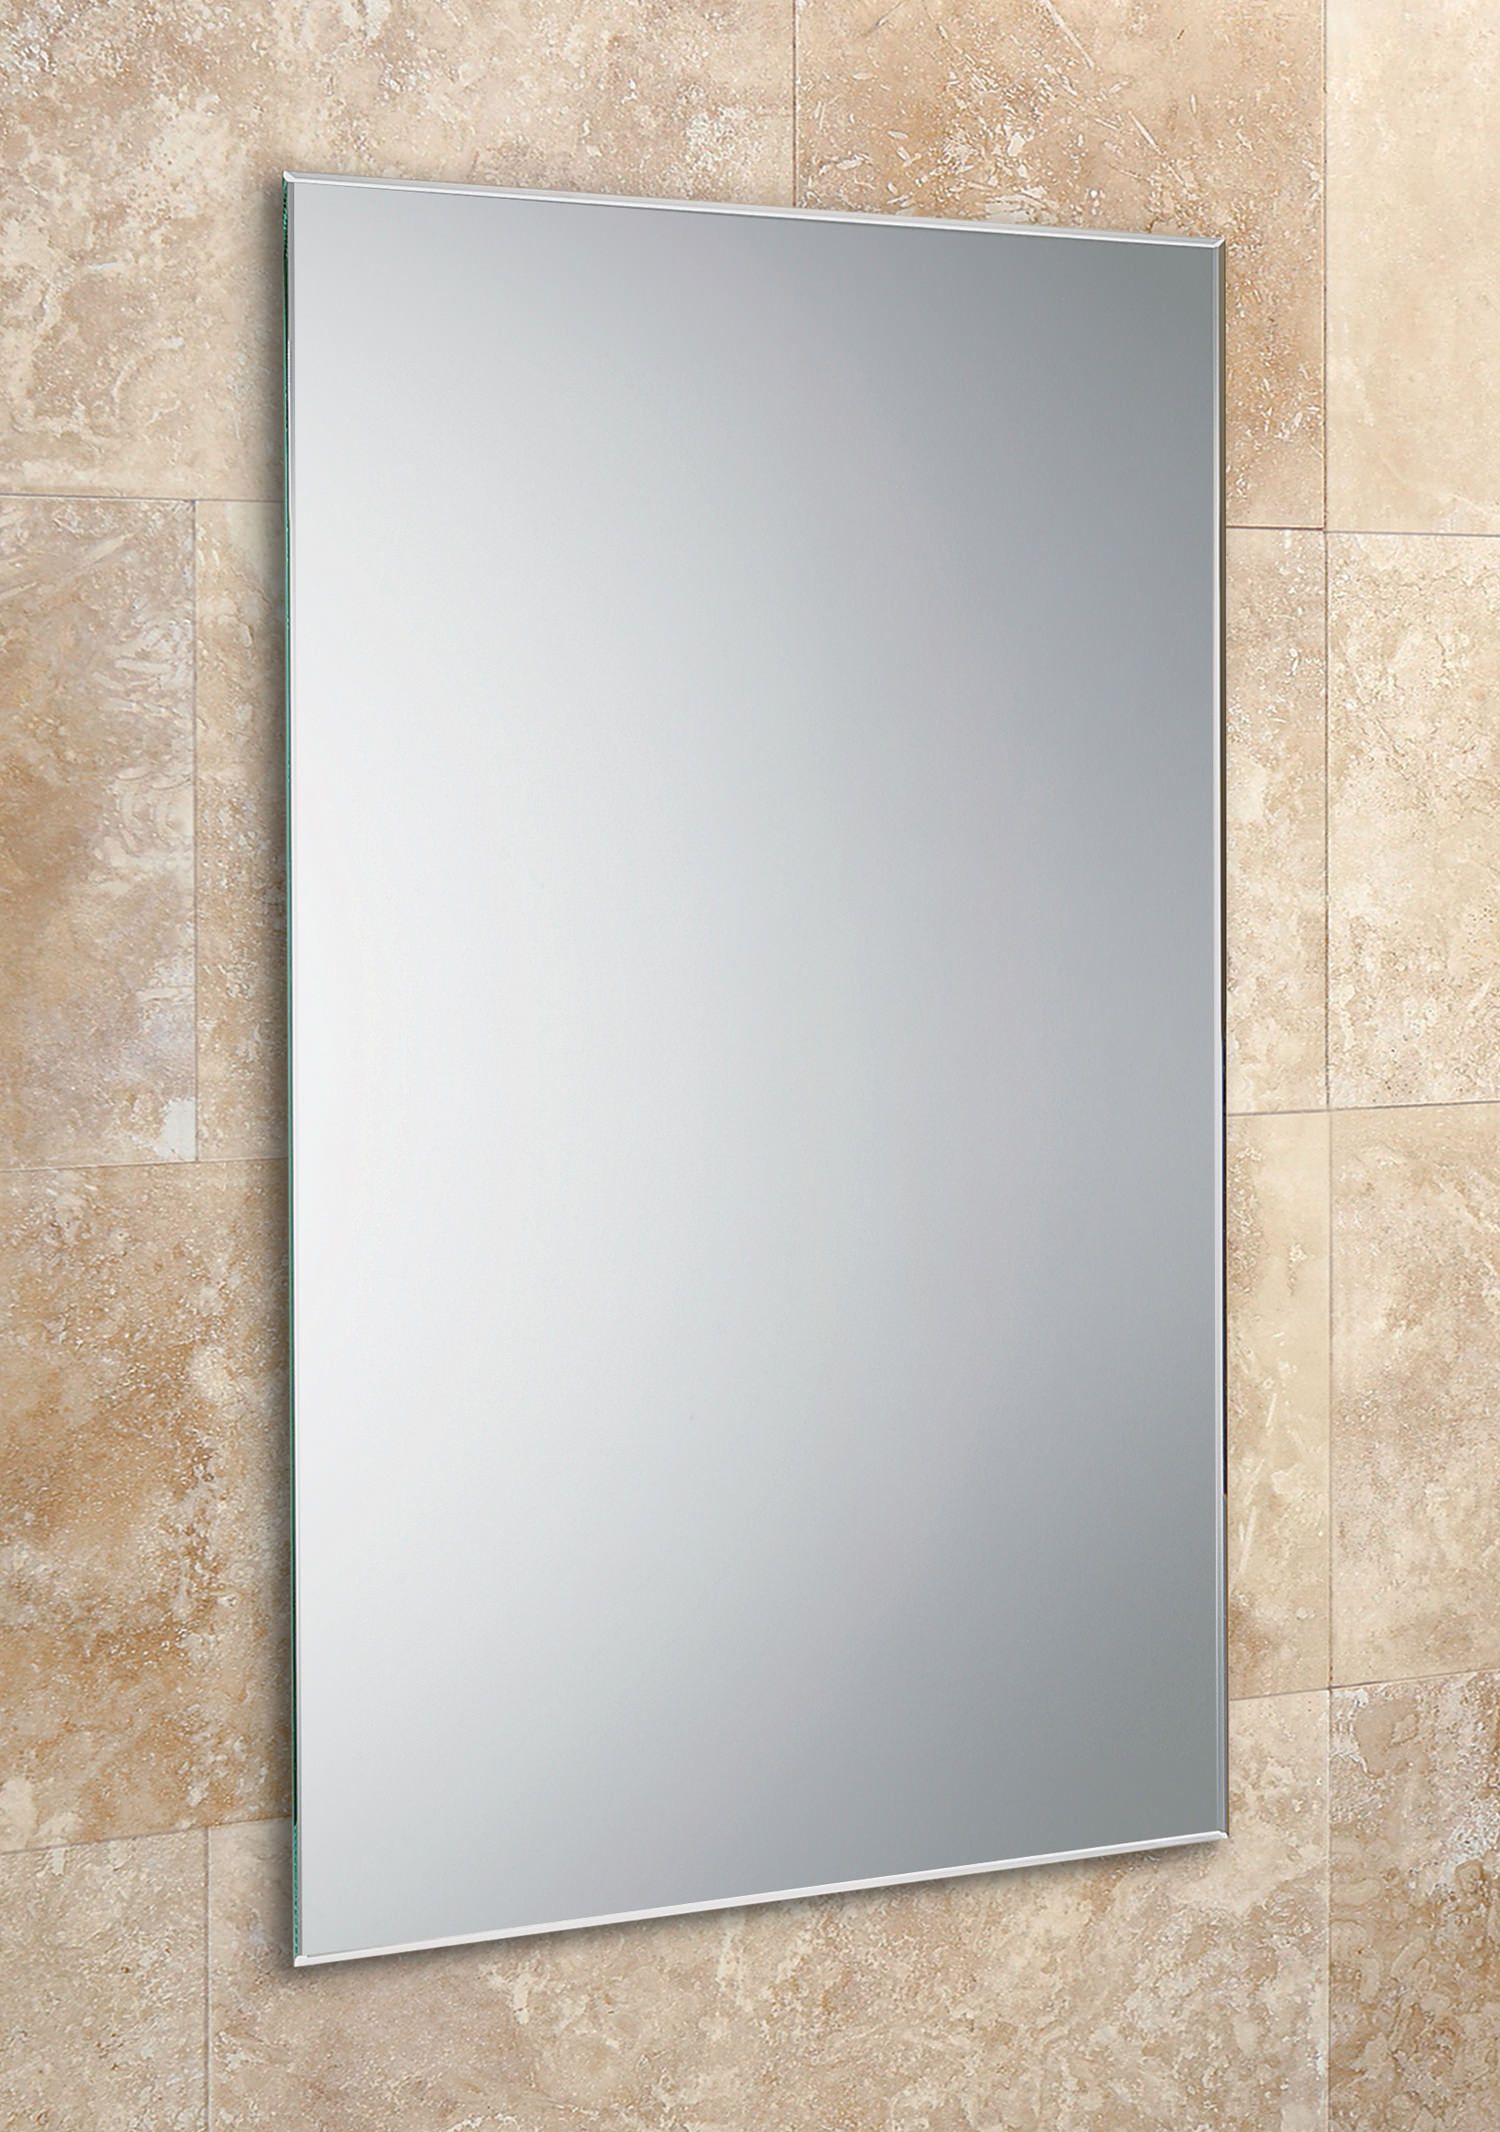 Hib Johnson Rectangular Mirror With Bevelled Edges 400 X 600mm | 76900000 Pertaining To Rectangular Chevron Edge Wall Mirrors (View 8 of 15)